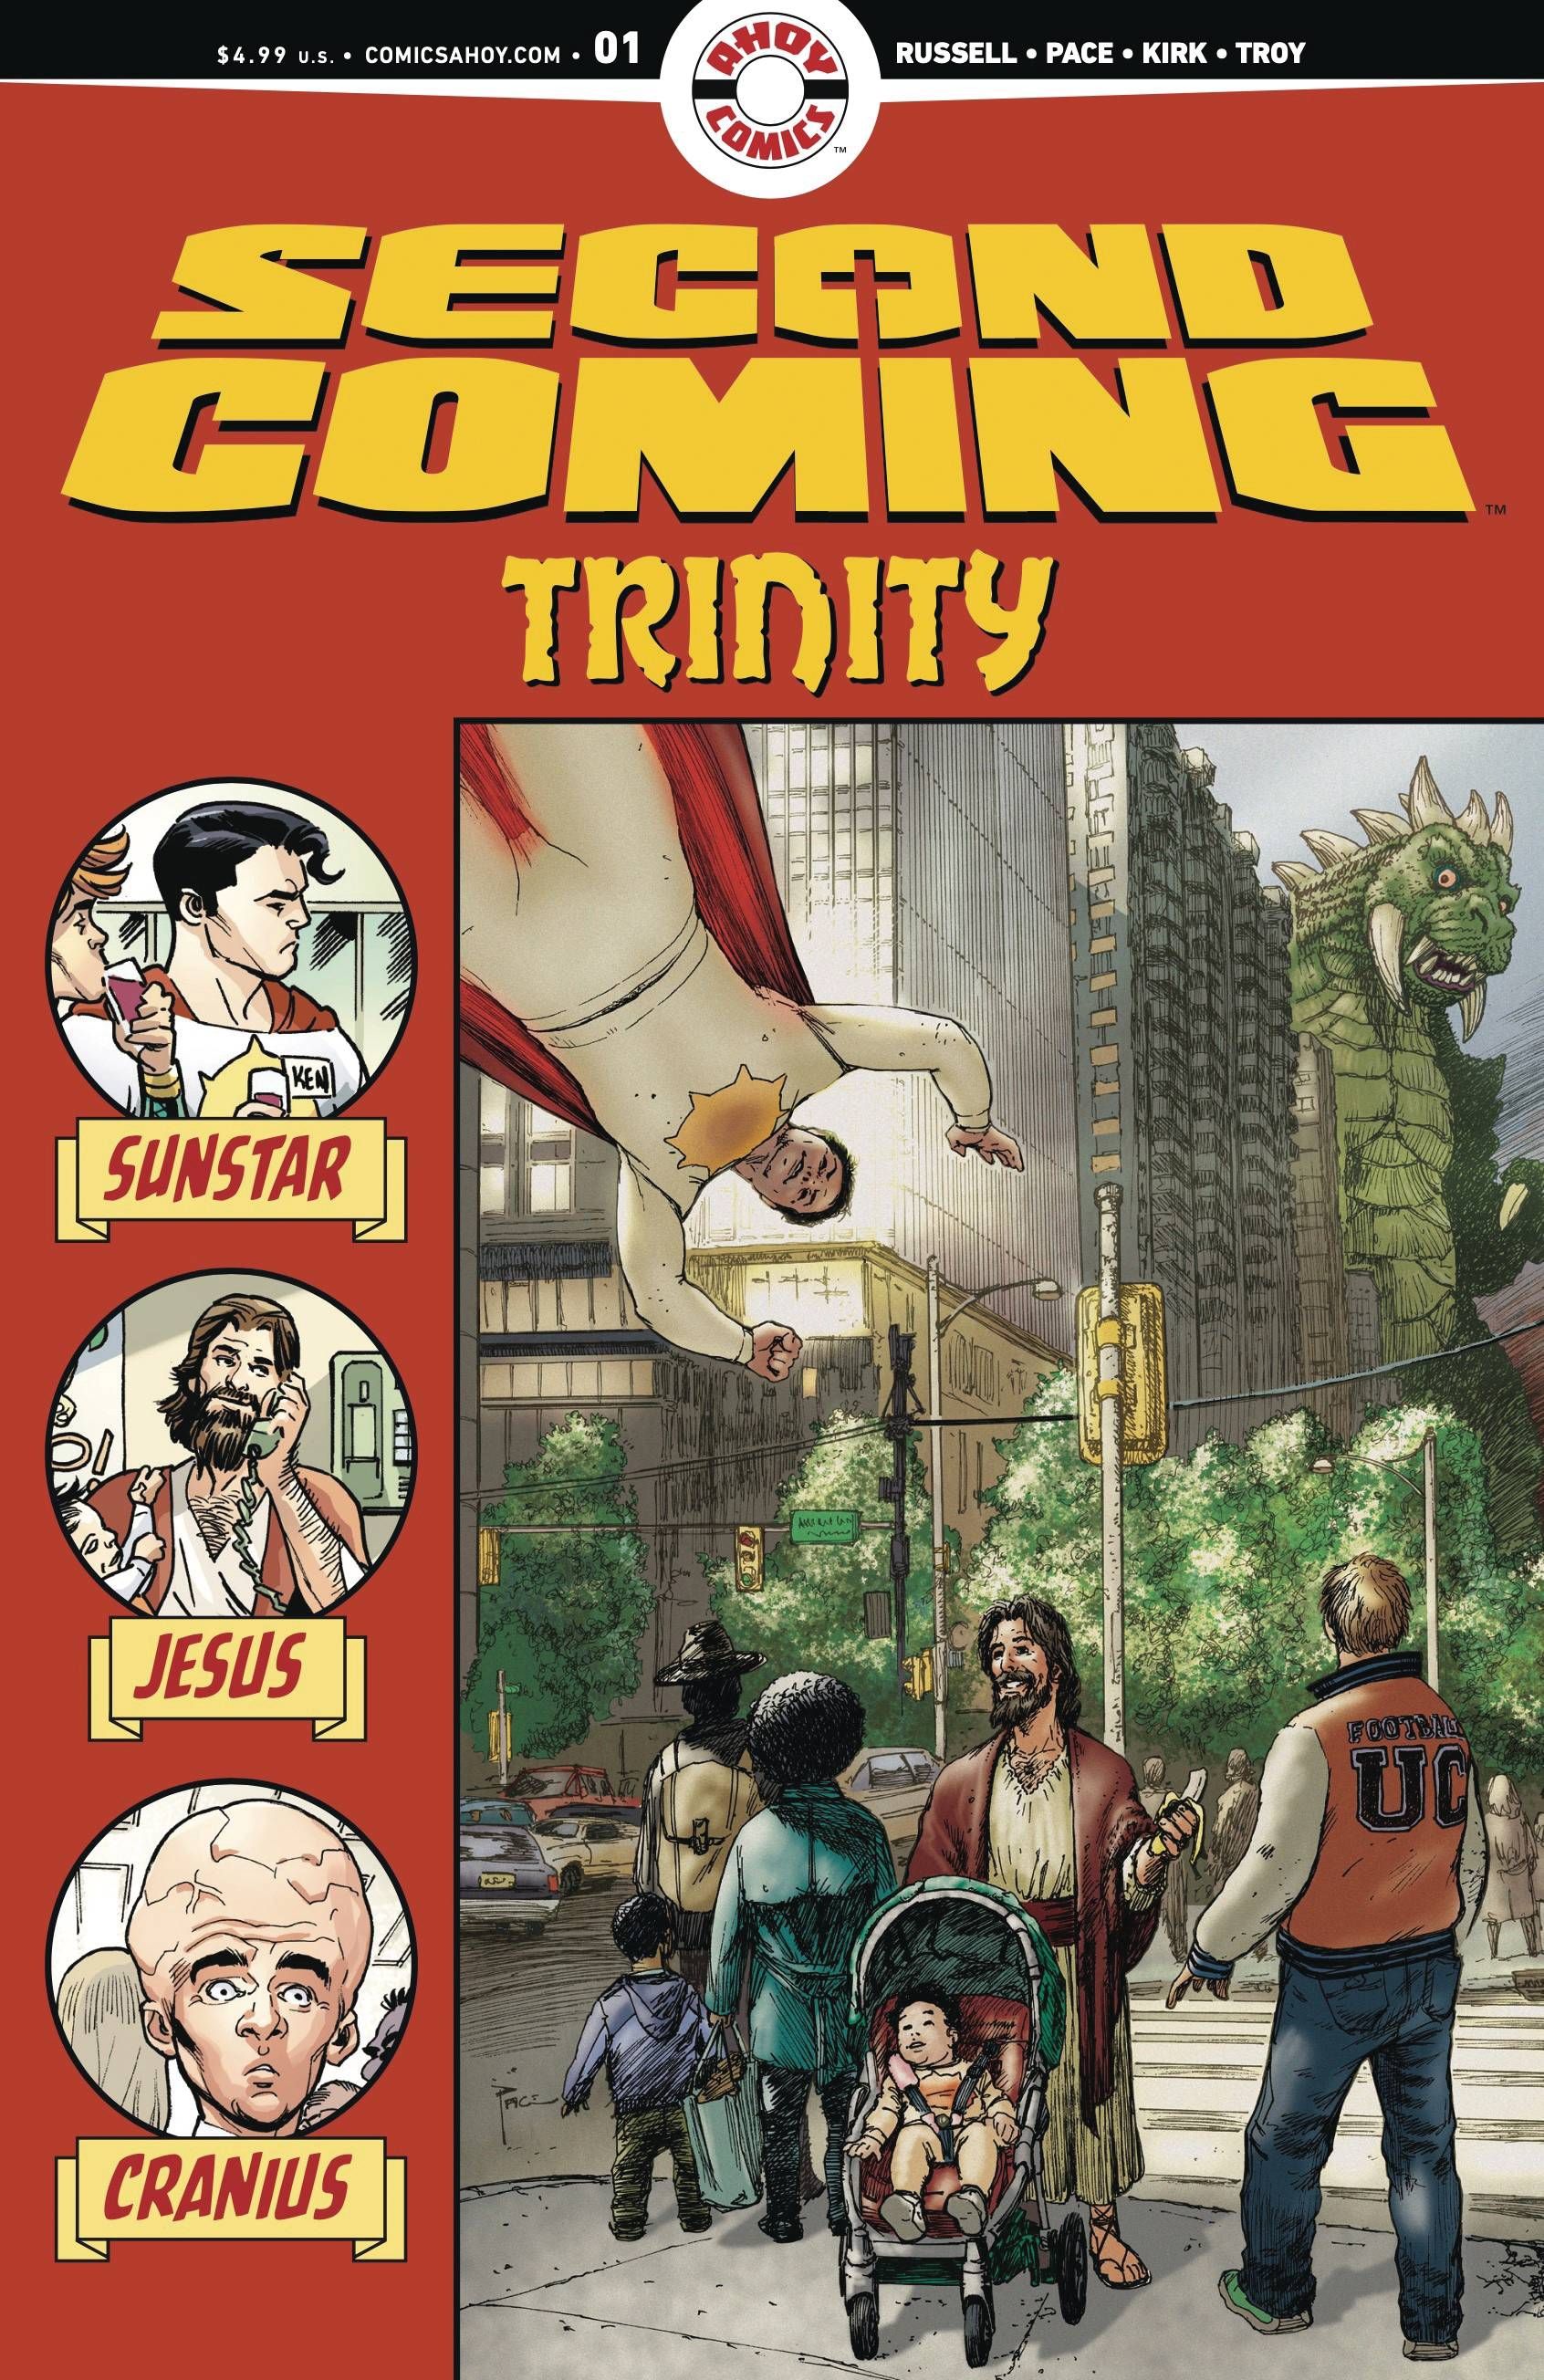 Second Coming Trinity #1 Cover featuring Sunstar, Jesus, and Cranius